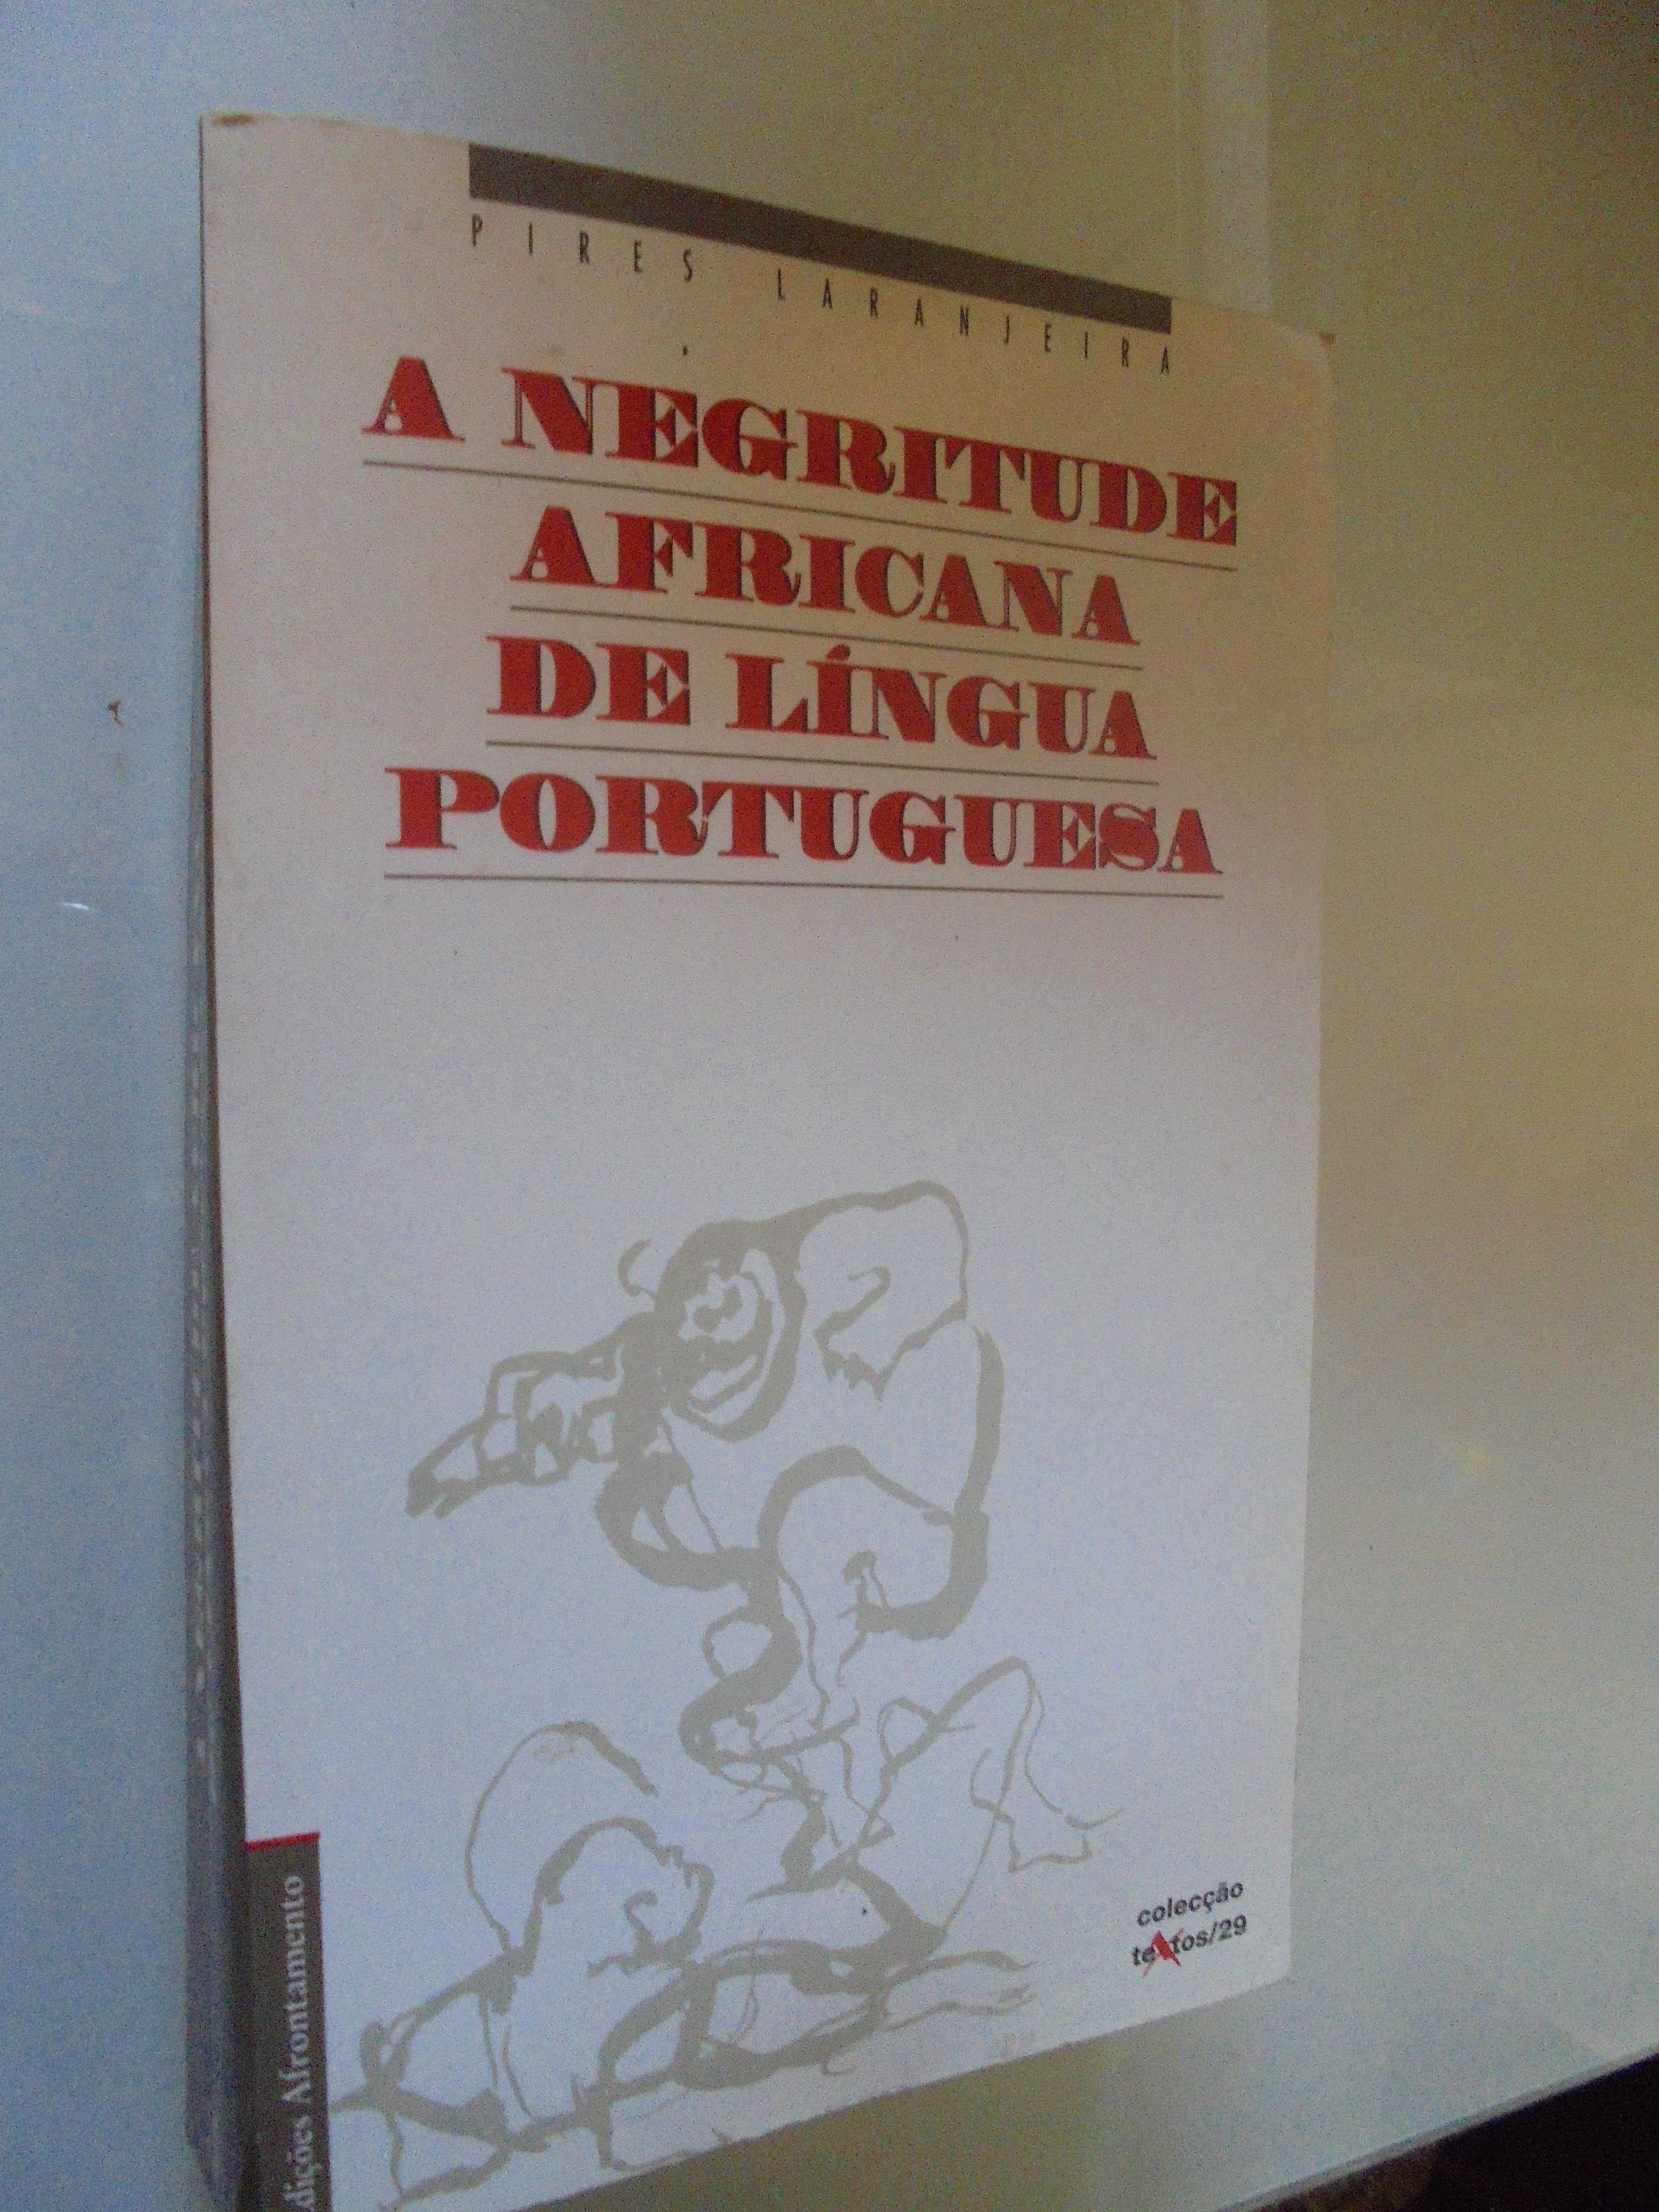 Laranjeira (Pires);A Negritude Africana da Língua Portuguesa